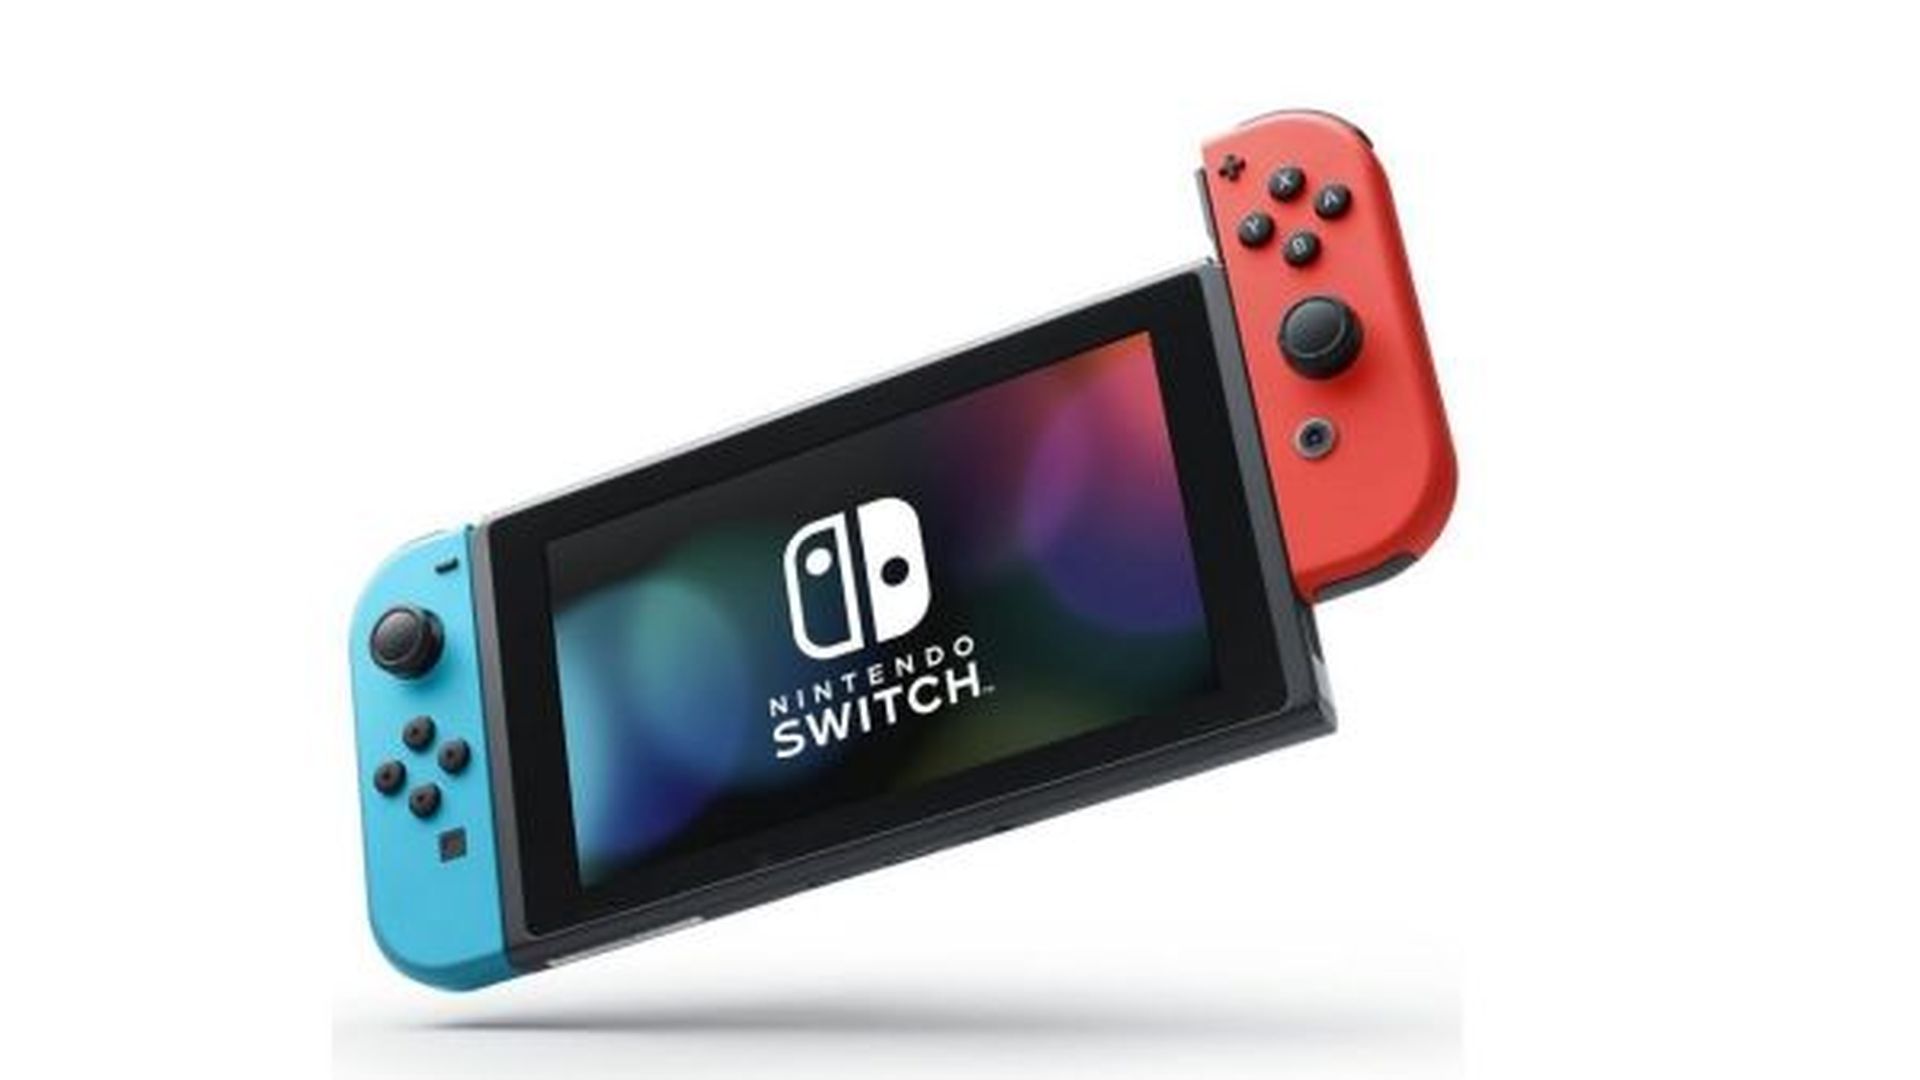 komplet symbol Vedholdende Nintendo Switch price drop confirmed in Europe and UK | GamesRadar+